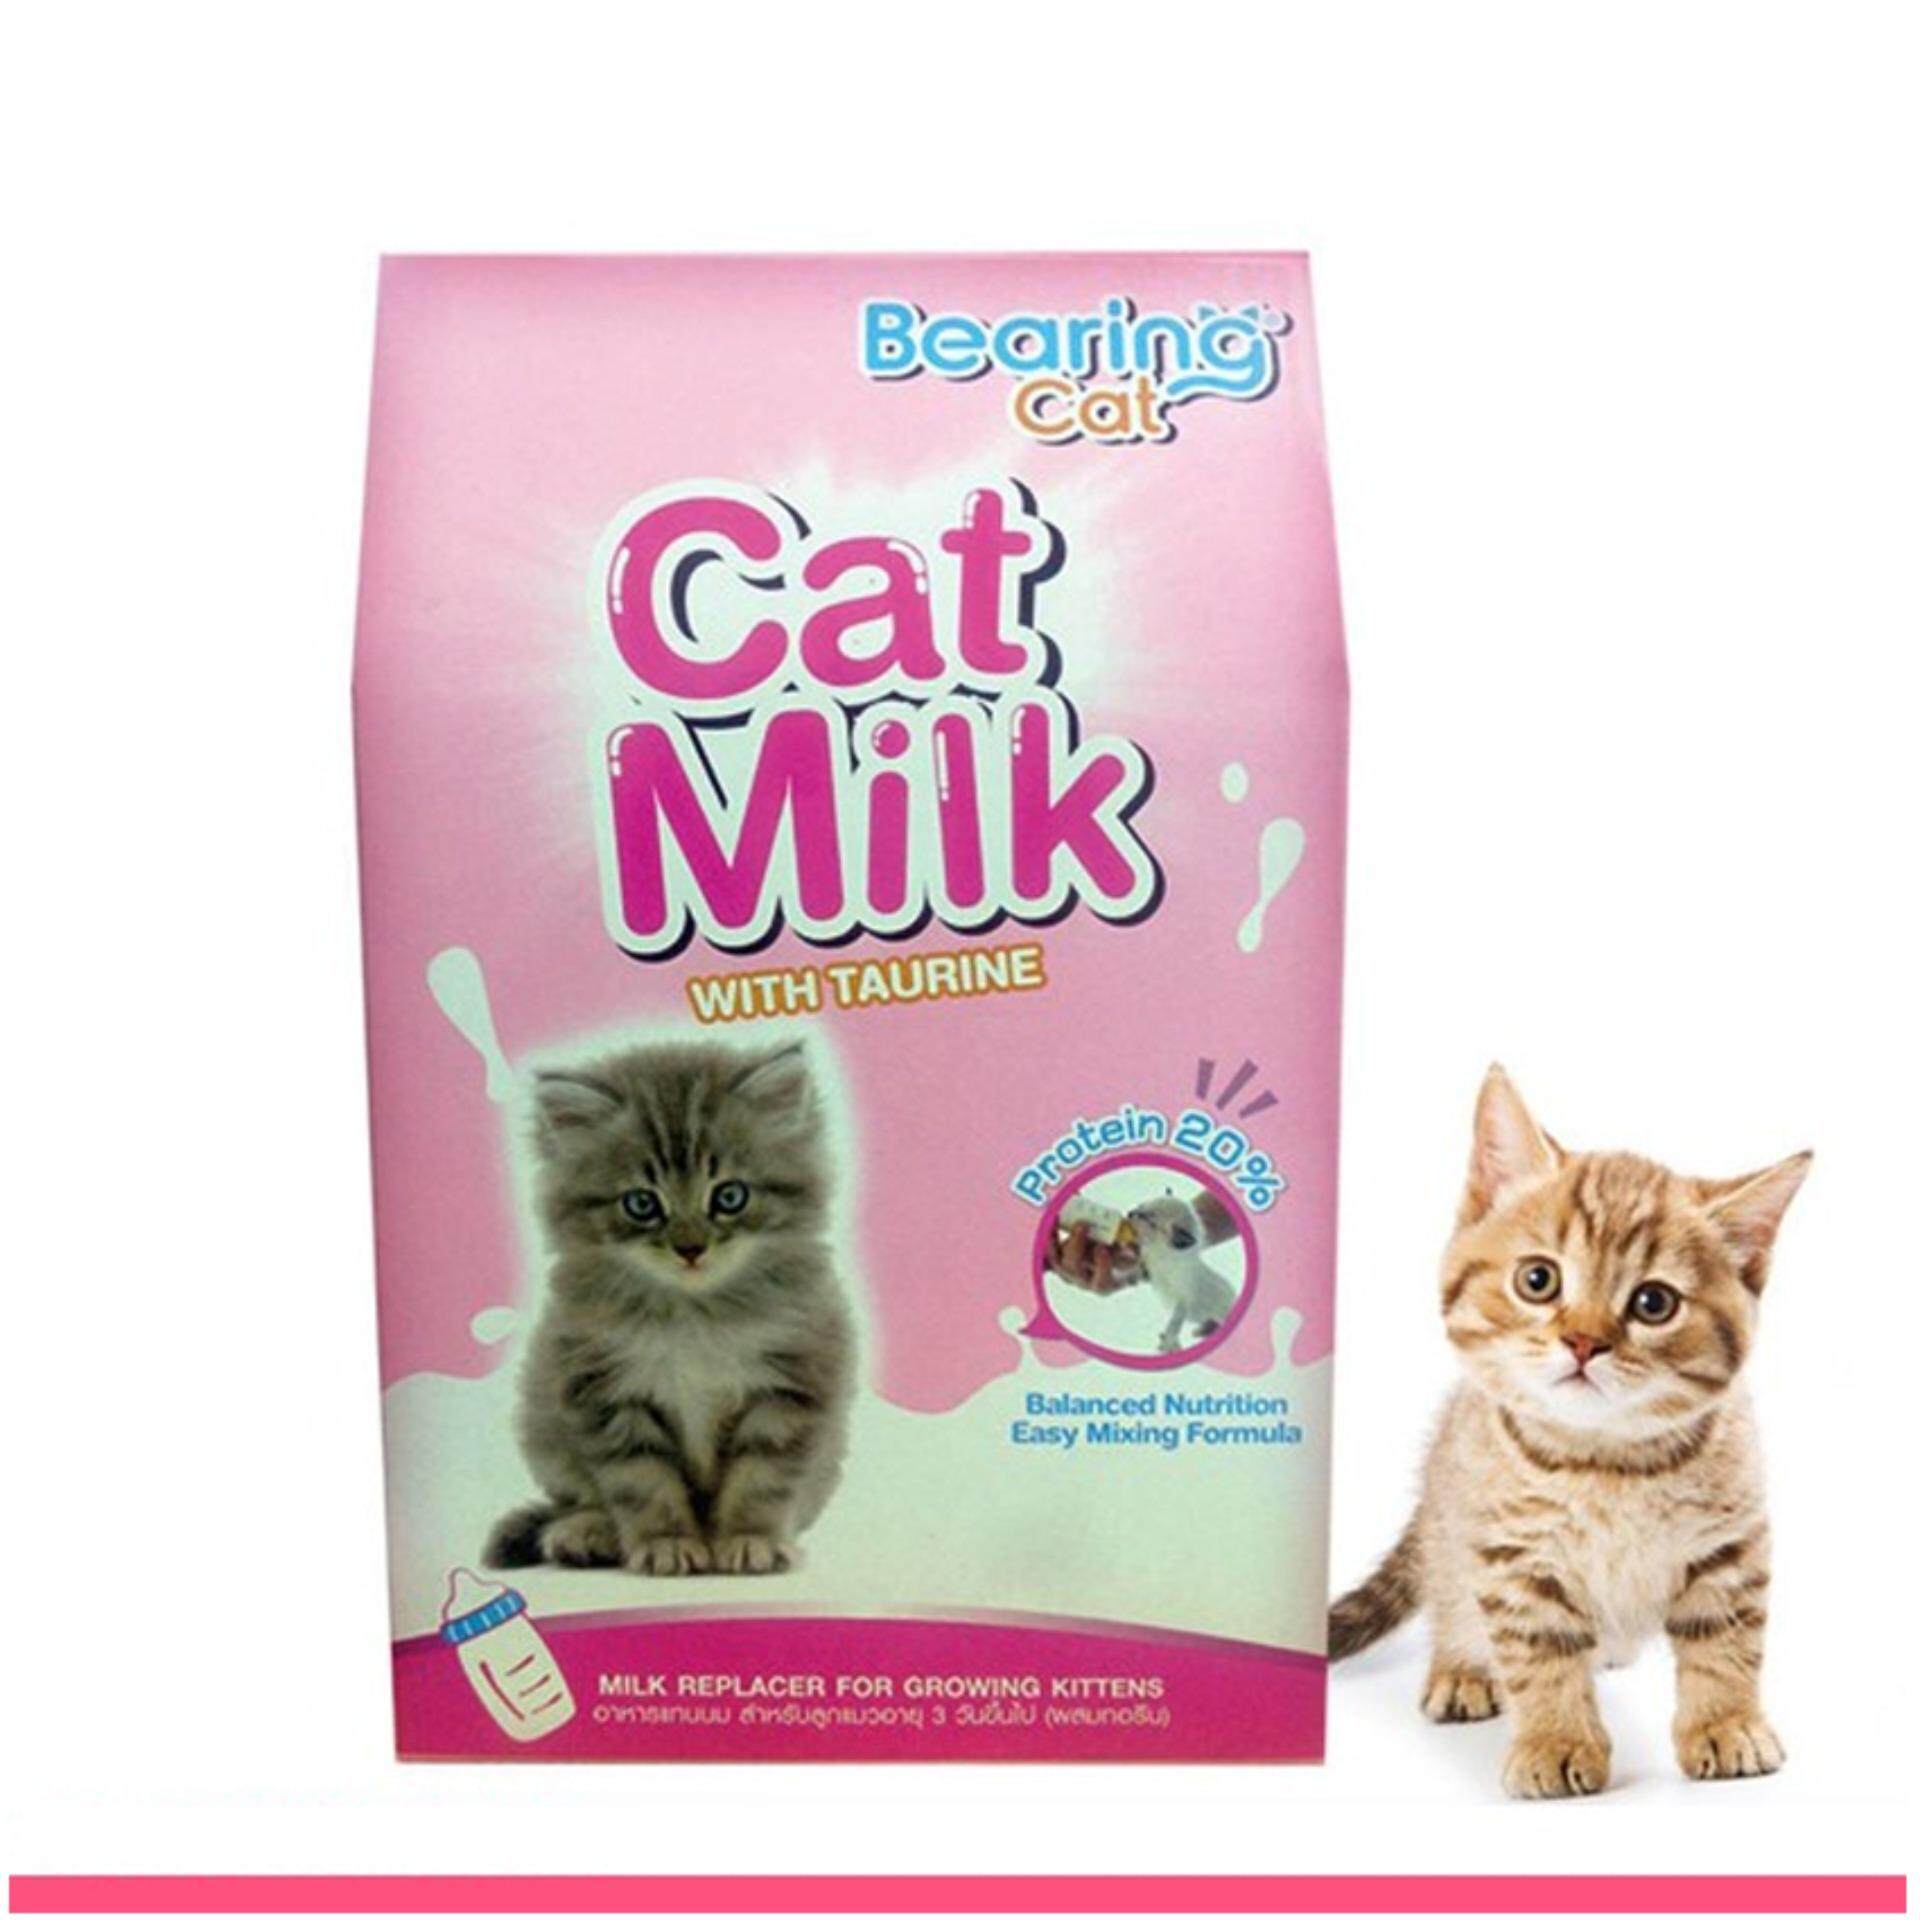 Bearing Cat Milk - นมผง แบริ่ง แคท ขนาด 300g